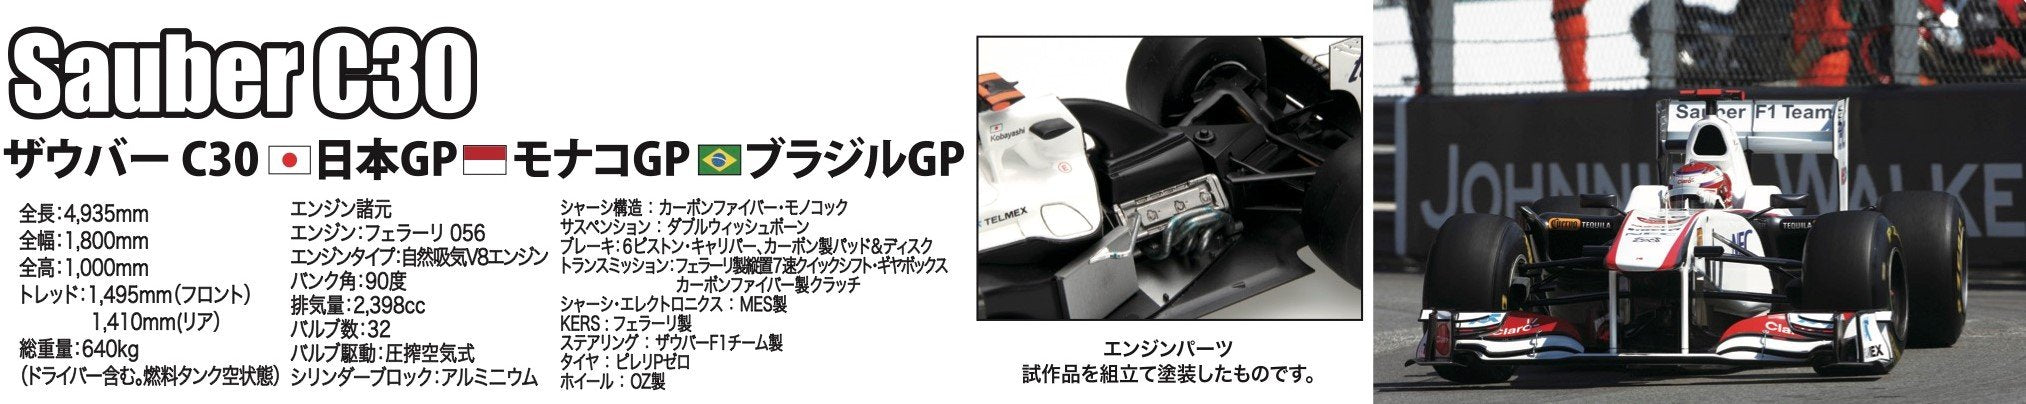 Fujimi Gp22 092089 Sauber C30 (Japan / Monaco / Brazil Gp) 1/20 Japanese Scale Racing Cars